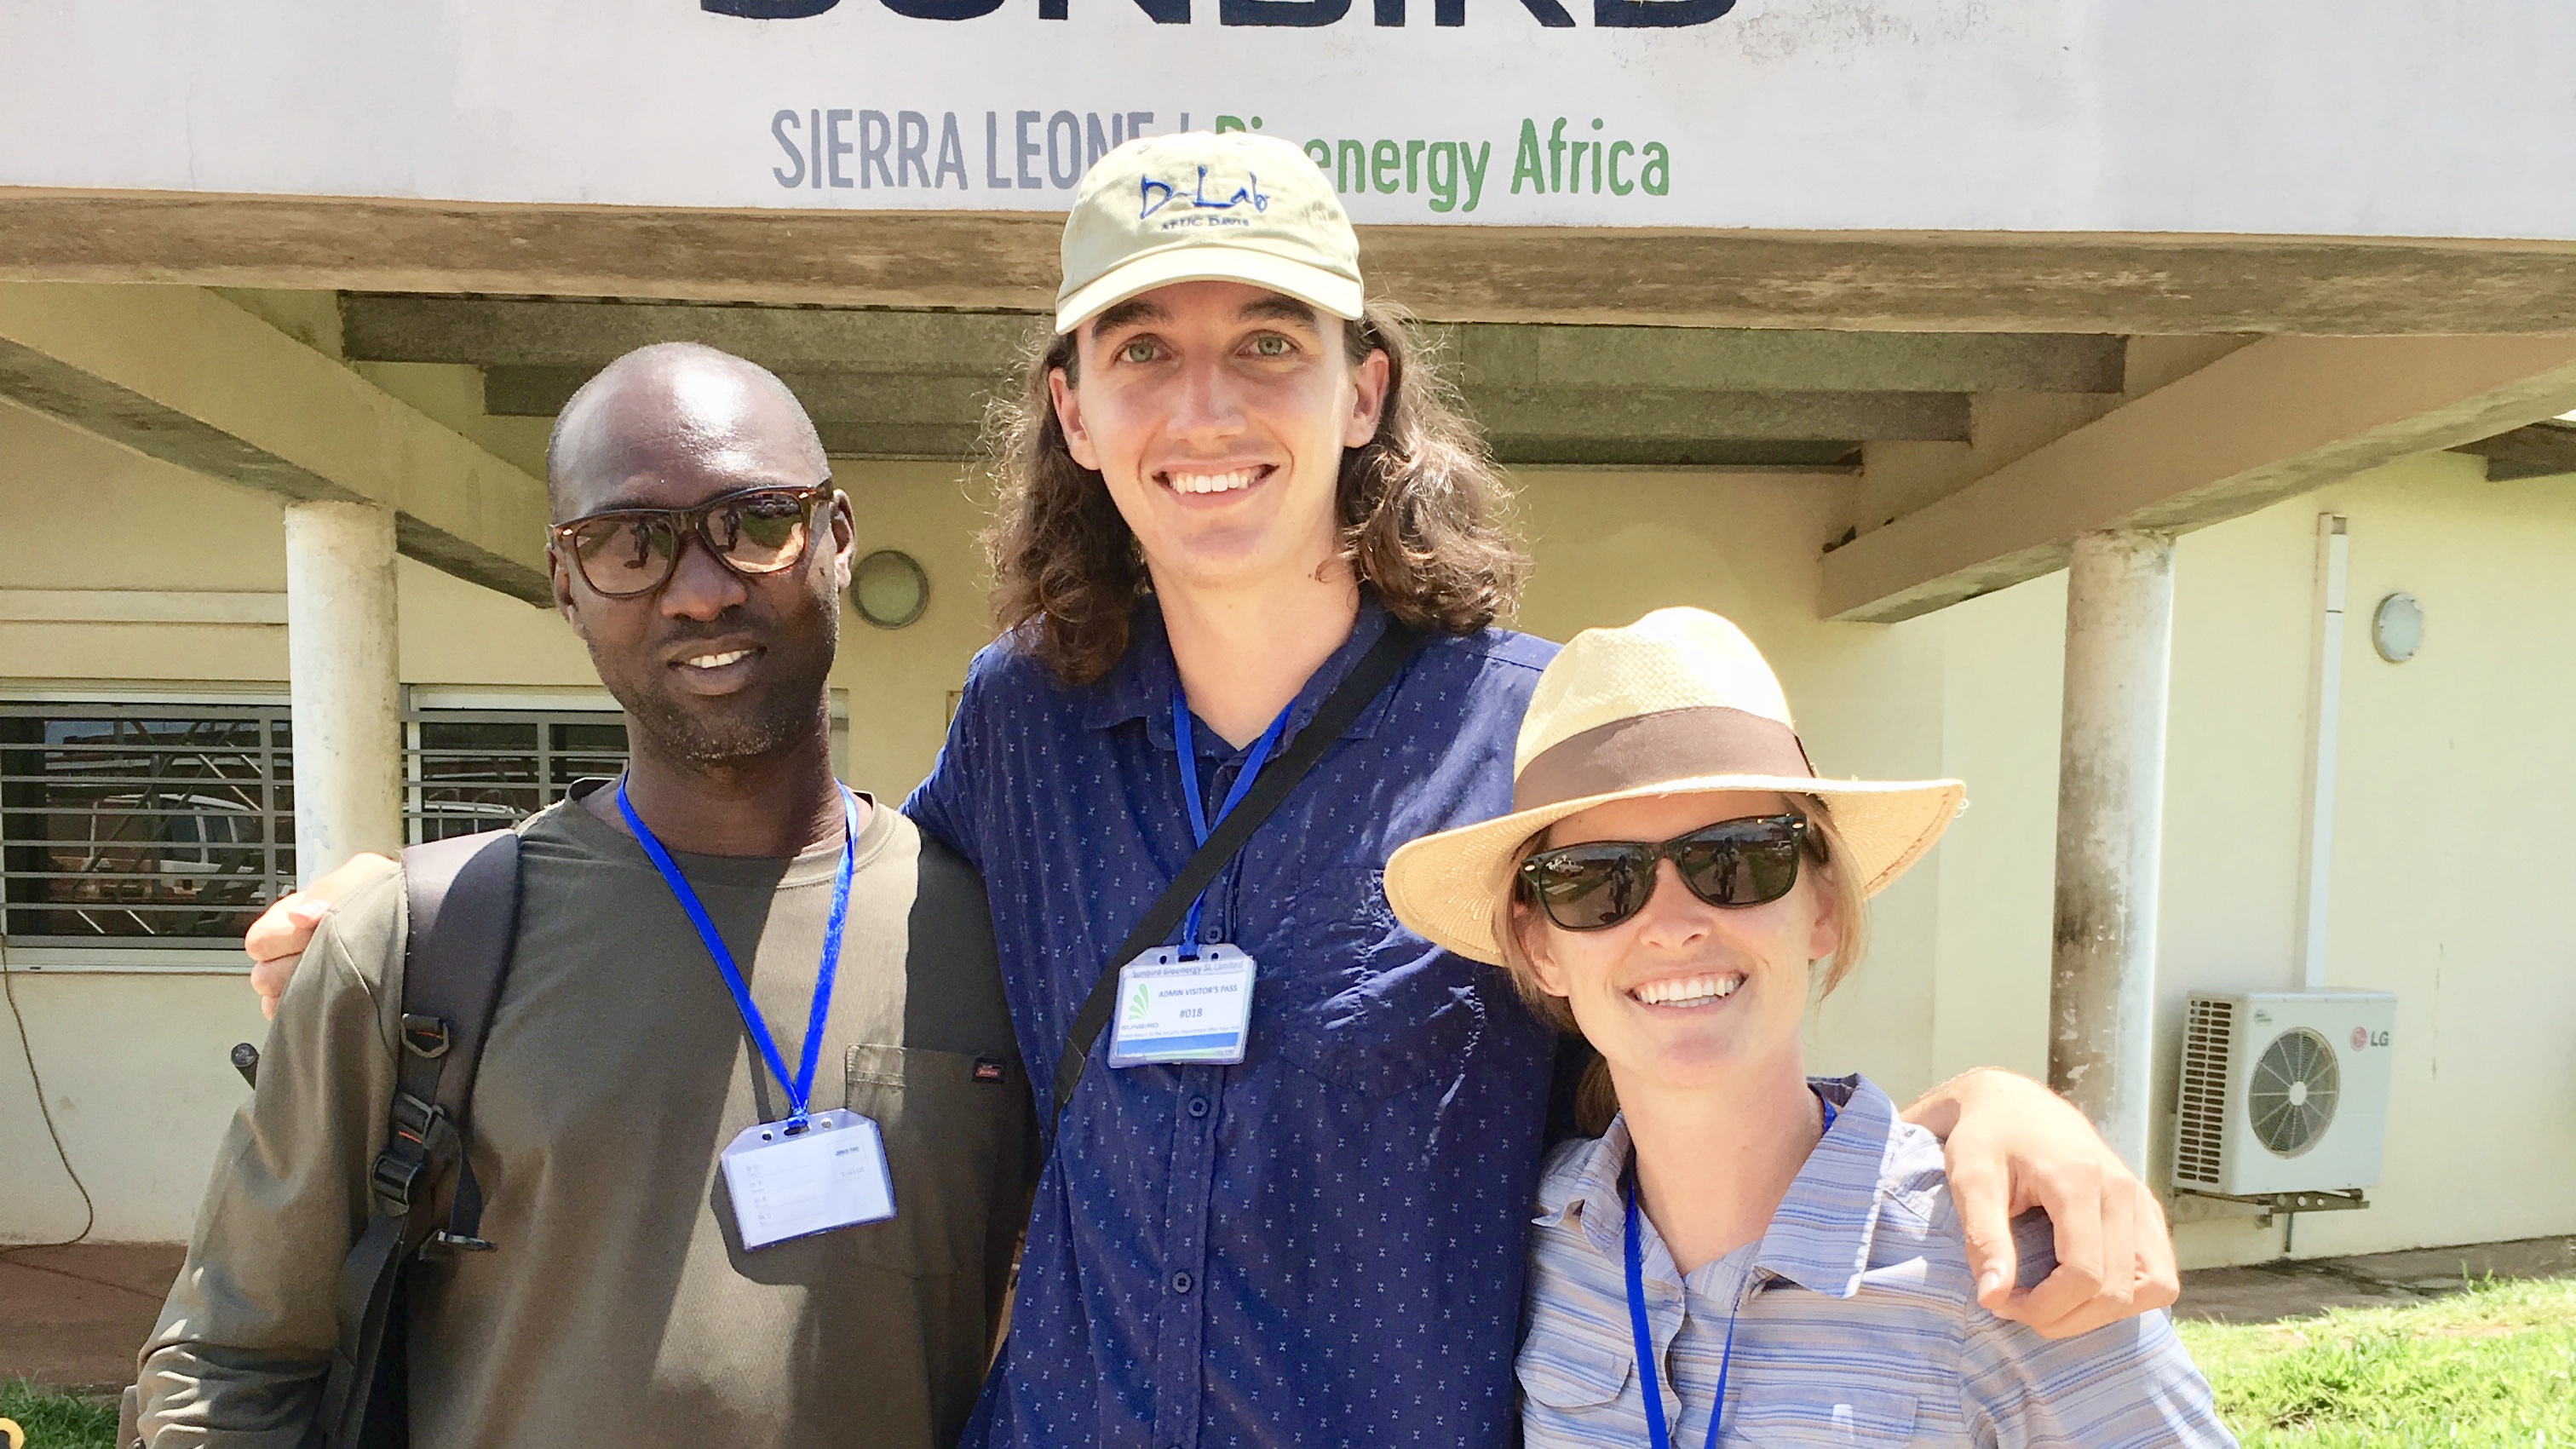 Martin Kailie, Peter Nasielski, and Dana Armstrong in Sierra Leone.